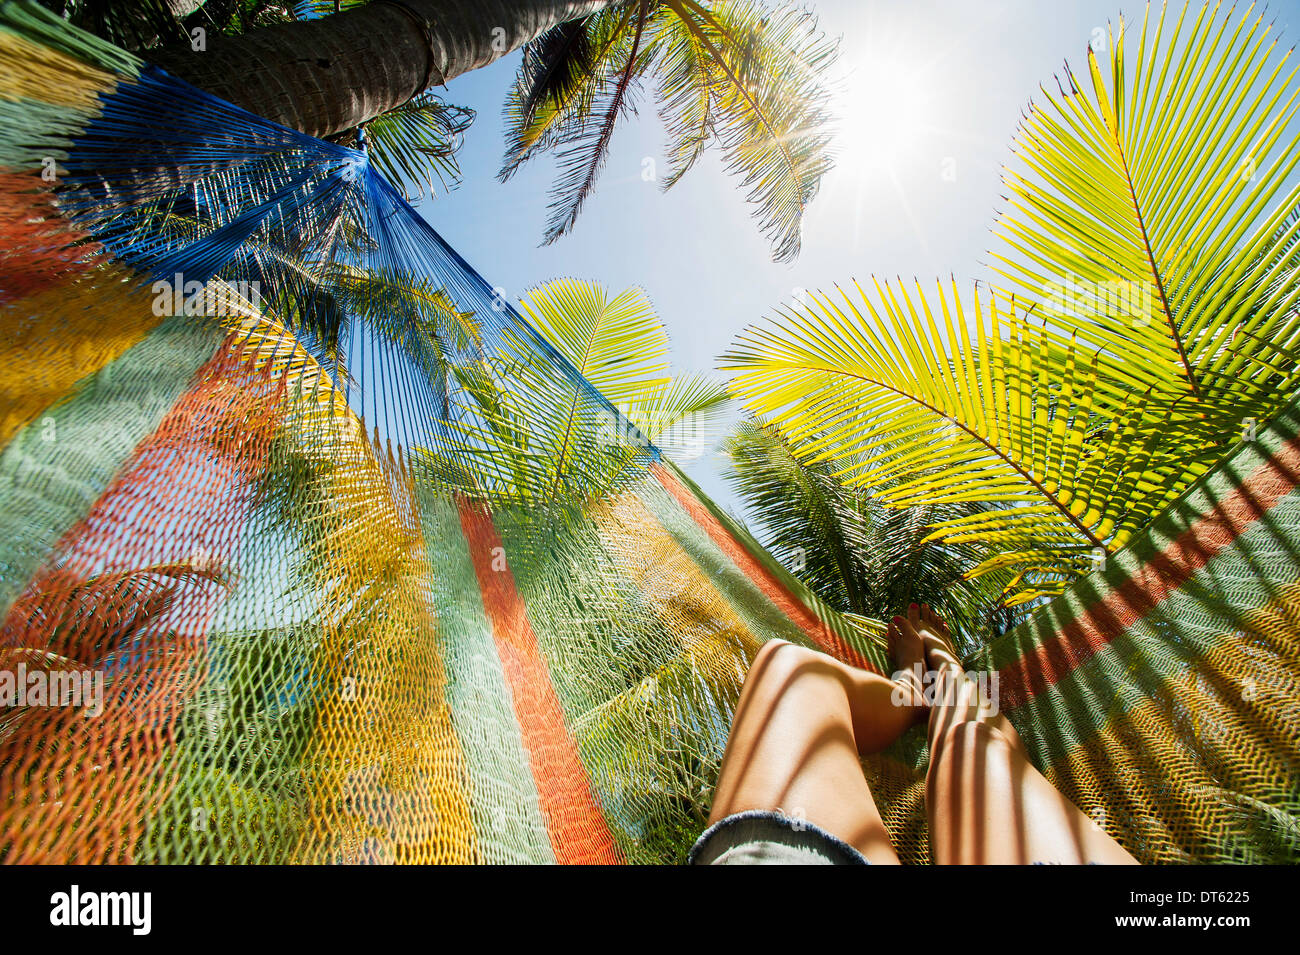 Female legs in hammock amongst palm trees, Barbados Stock Photo